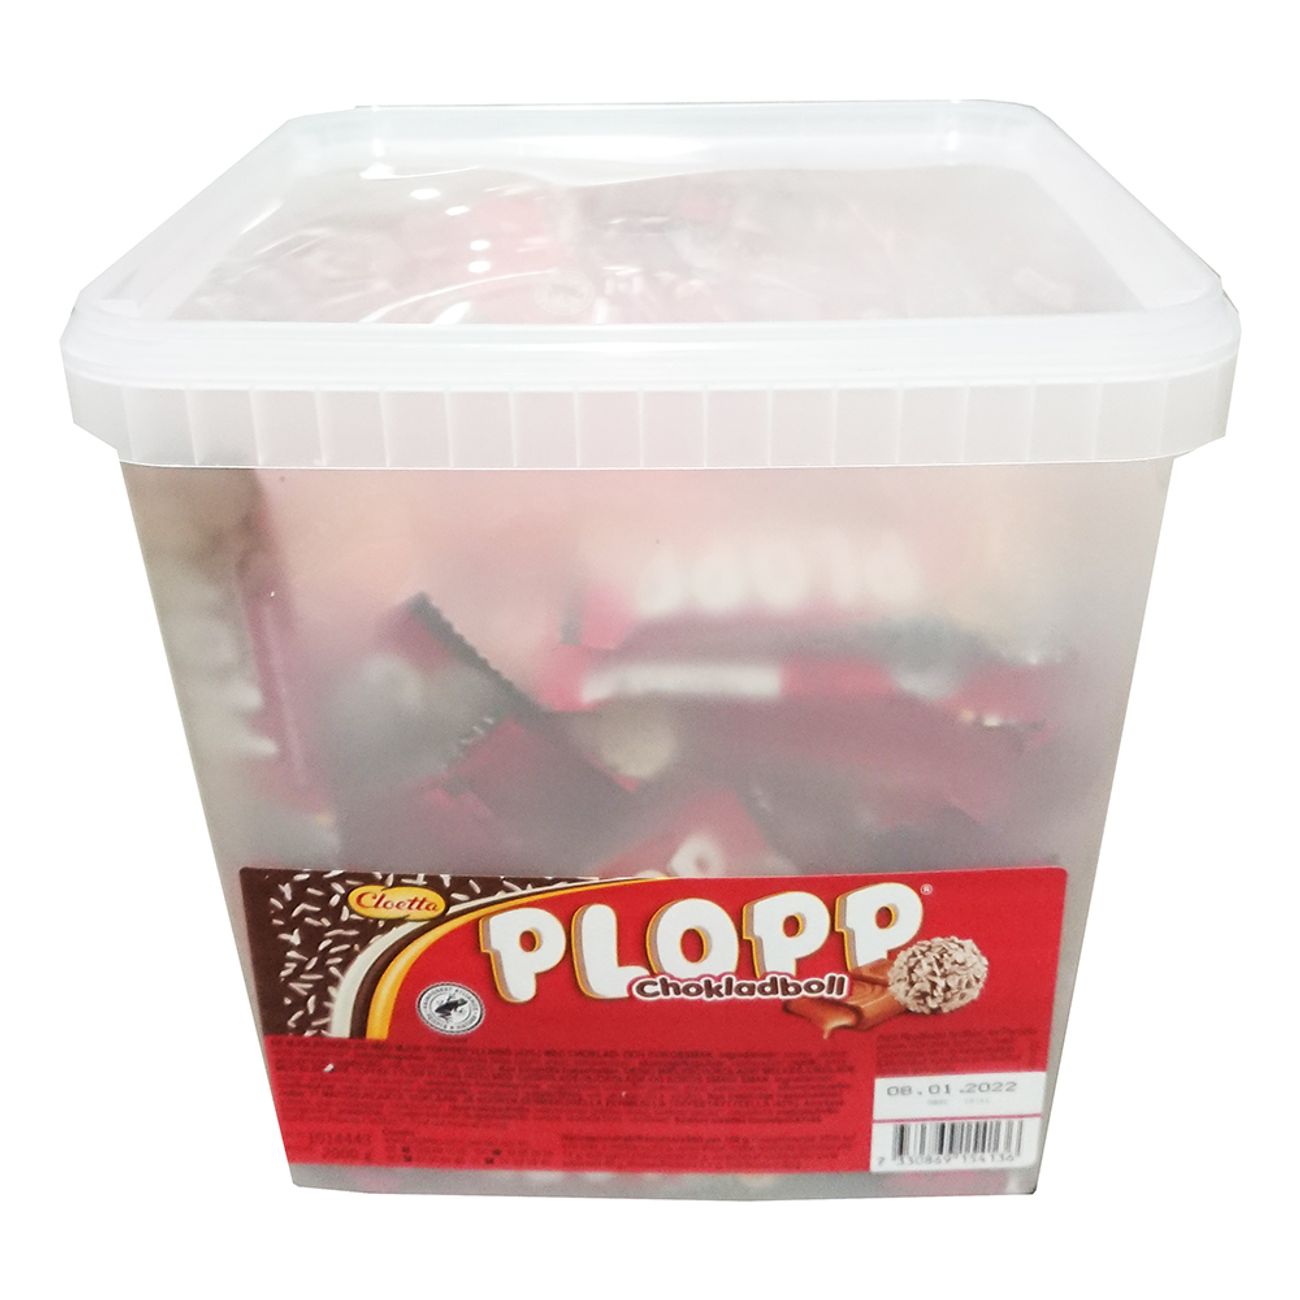 plopp-chokladboll-storpack-74742-1